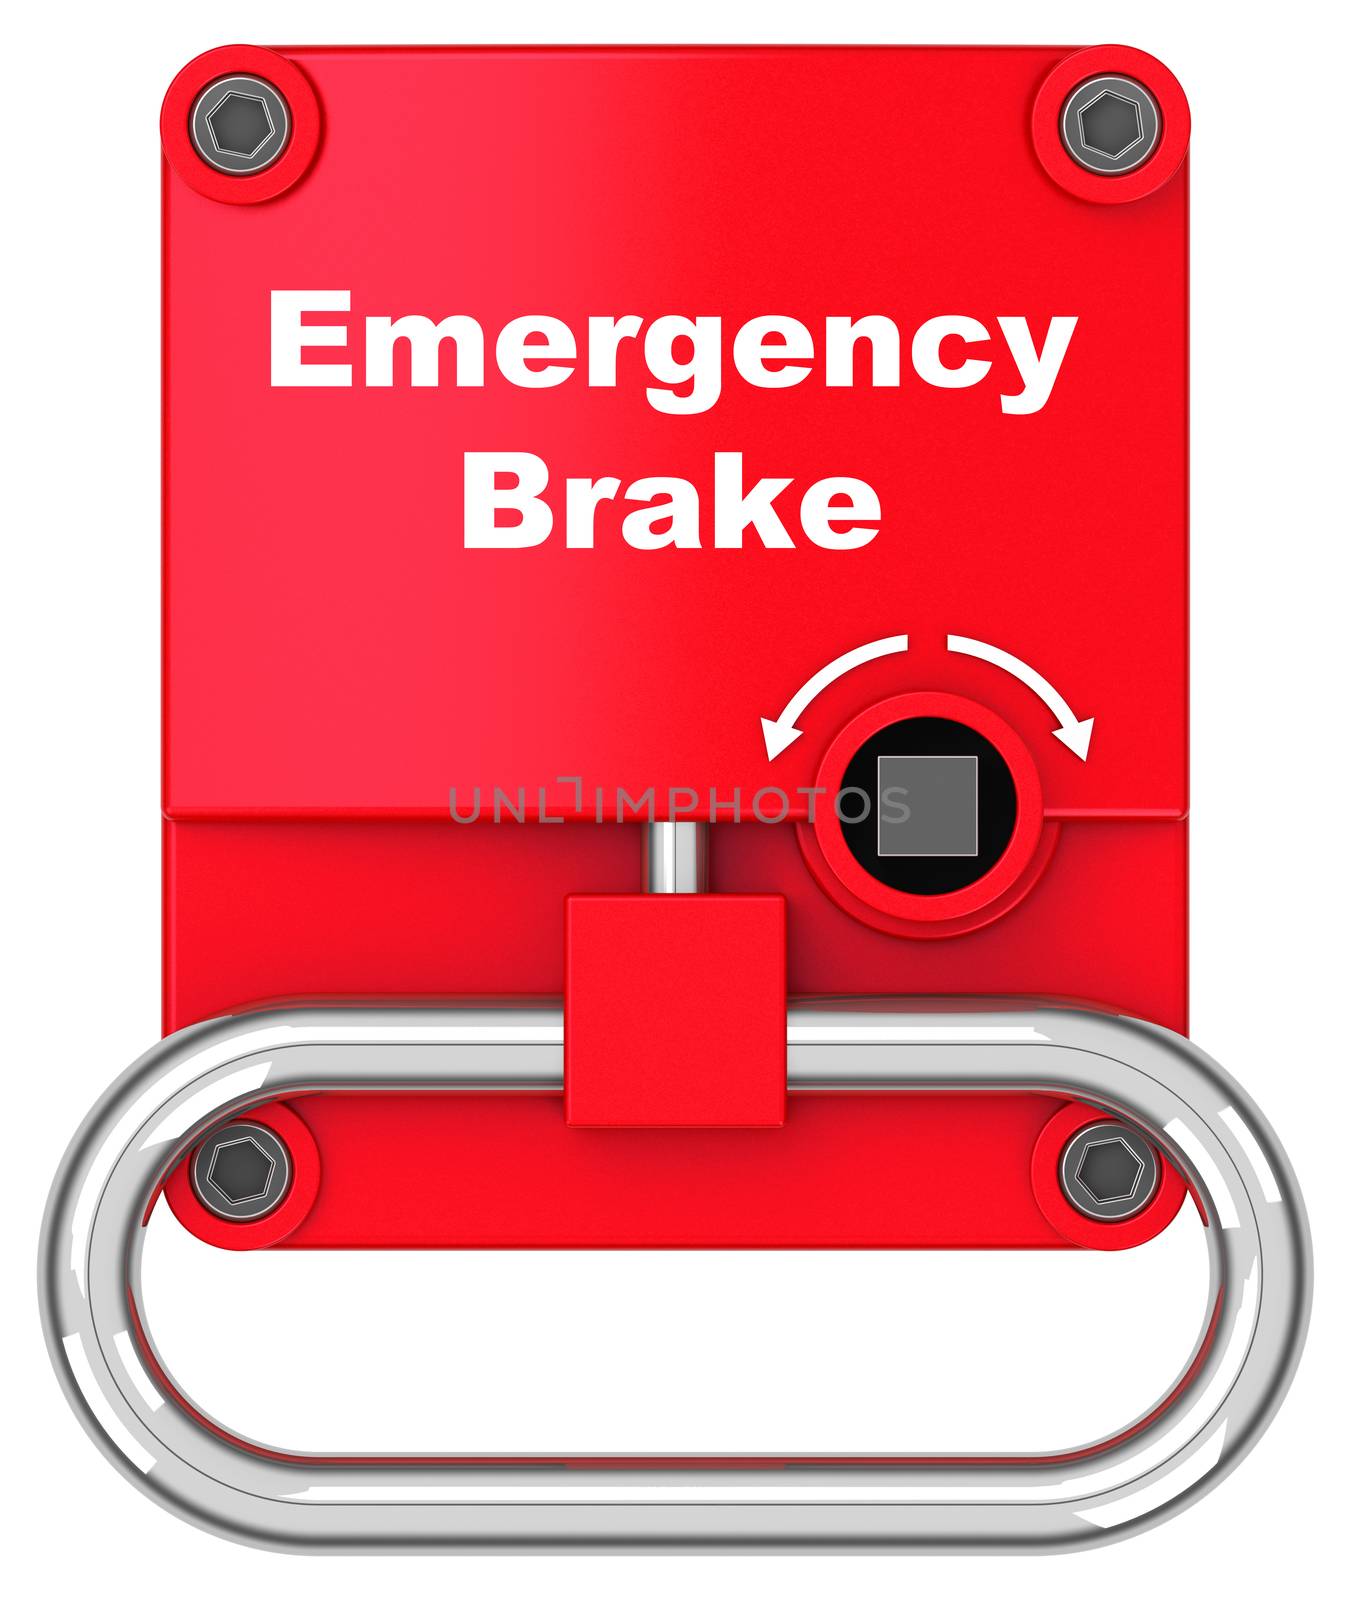 The emergency brake by delta_art